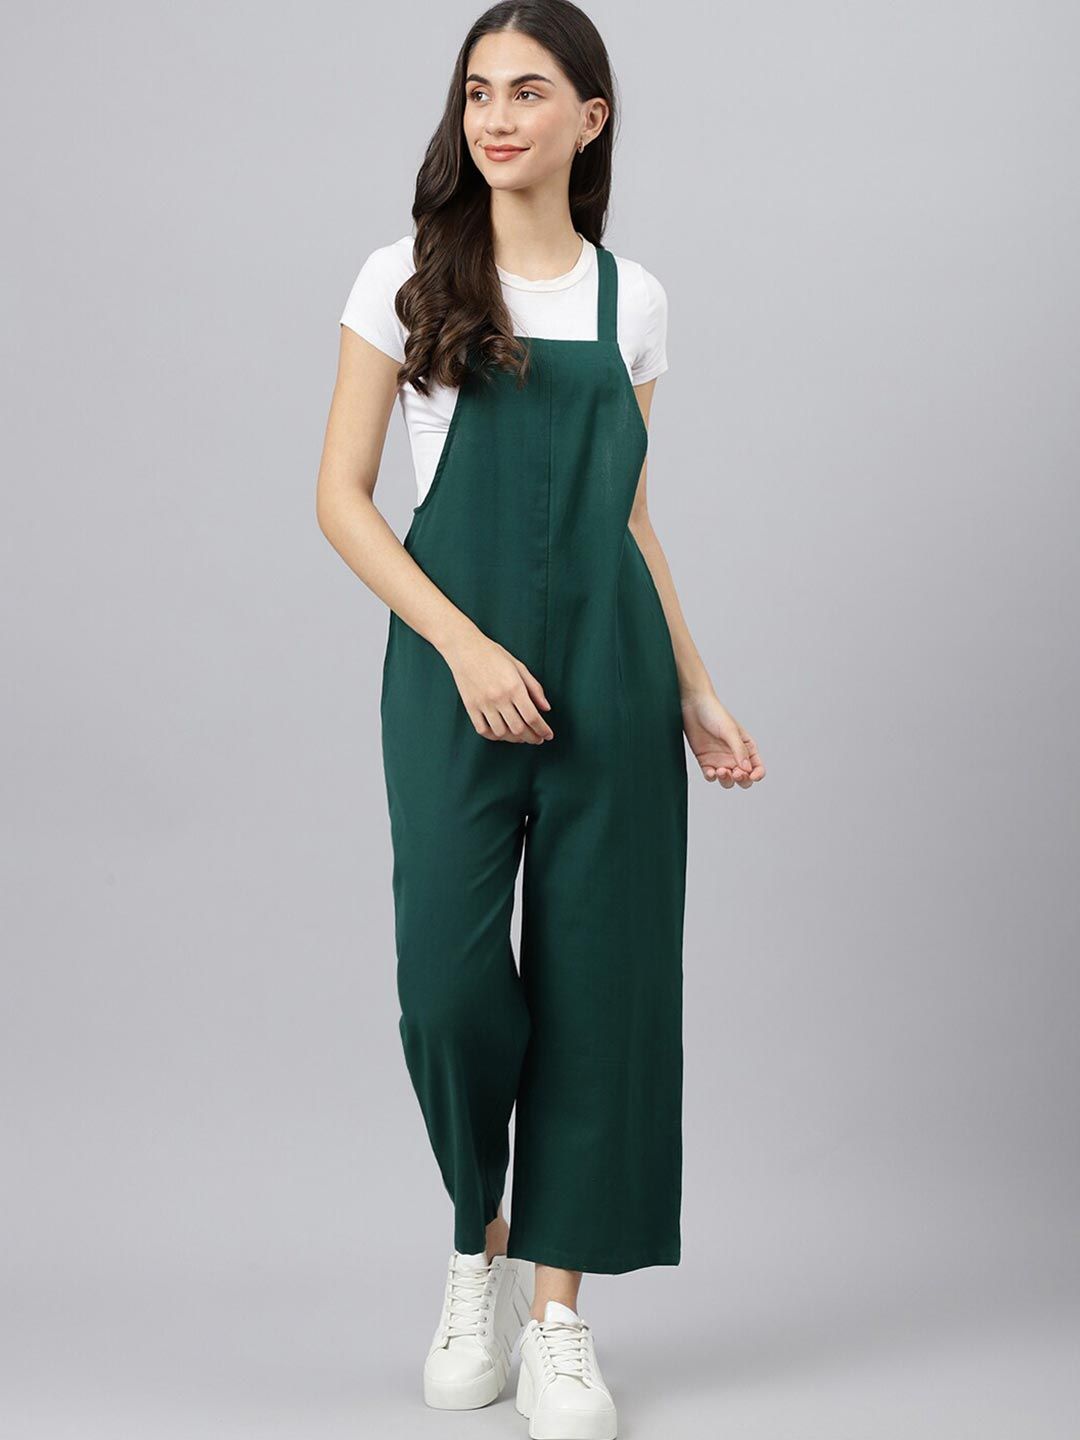 DEEBACO Green & White Culotte Jumpsuit Price in India